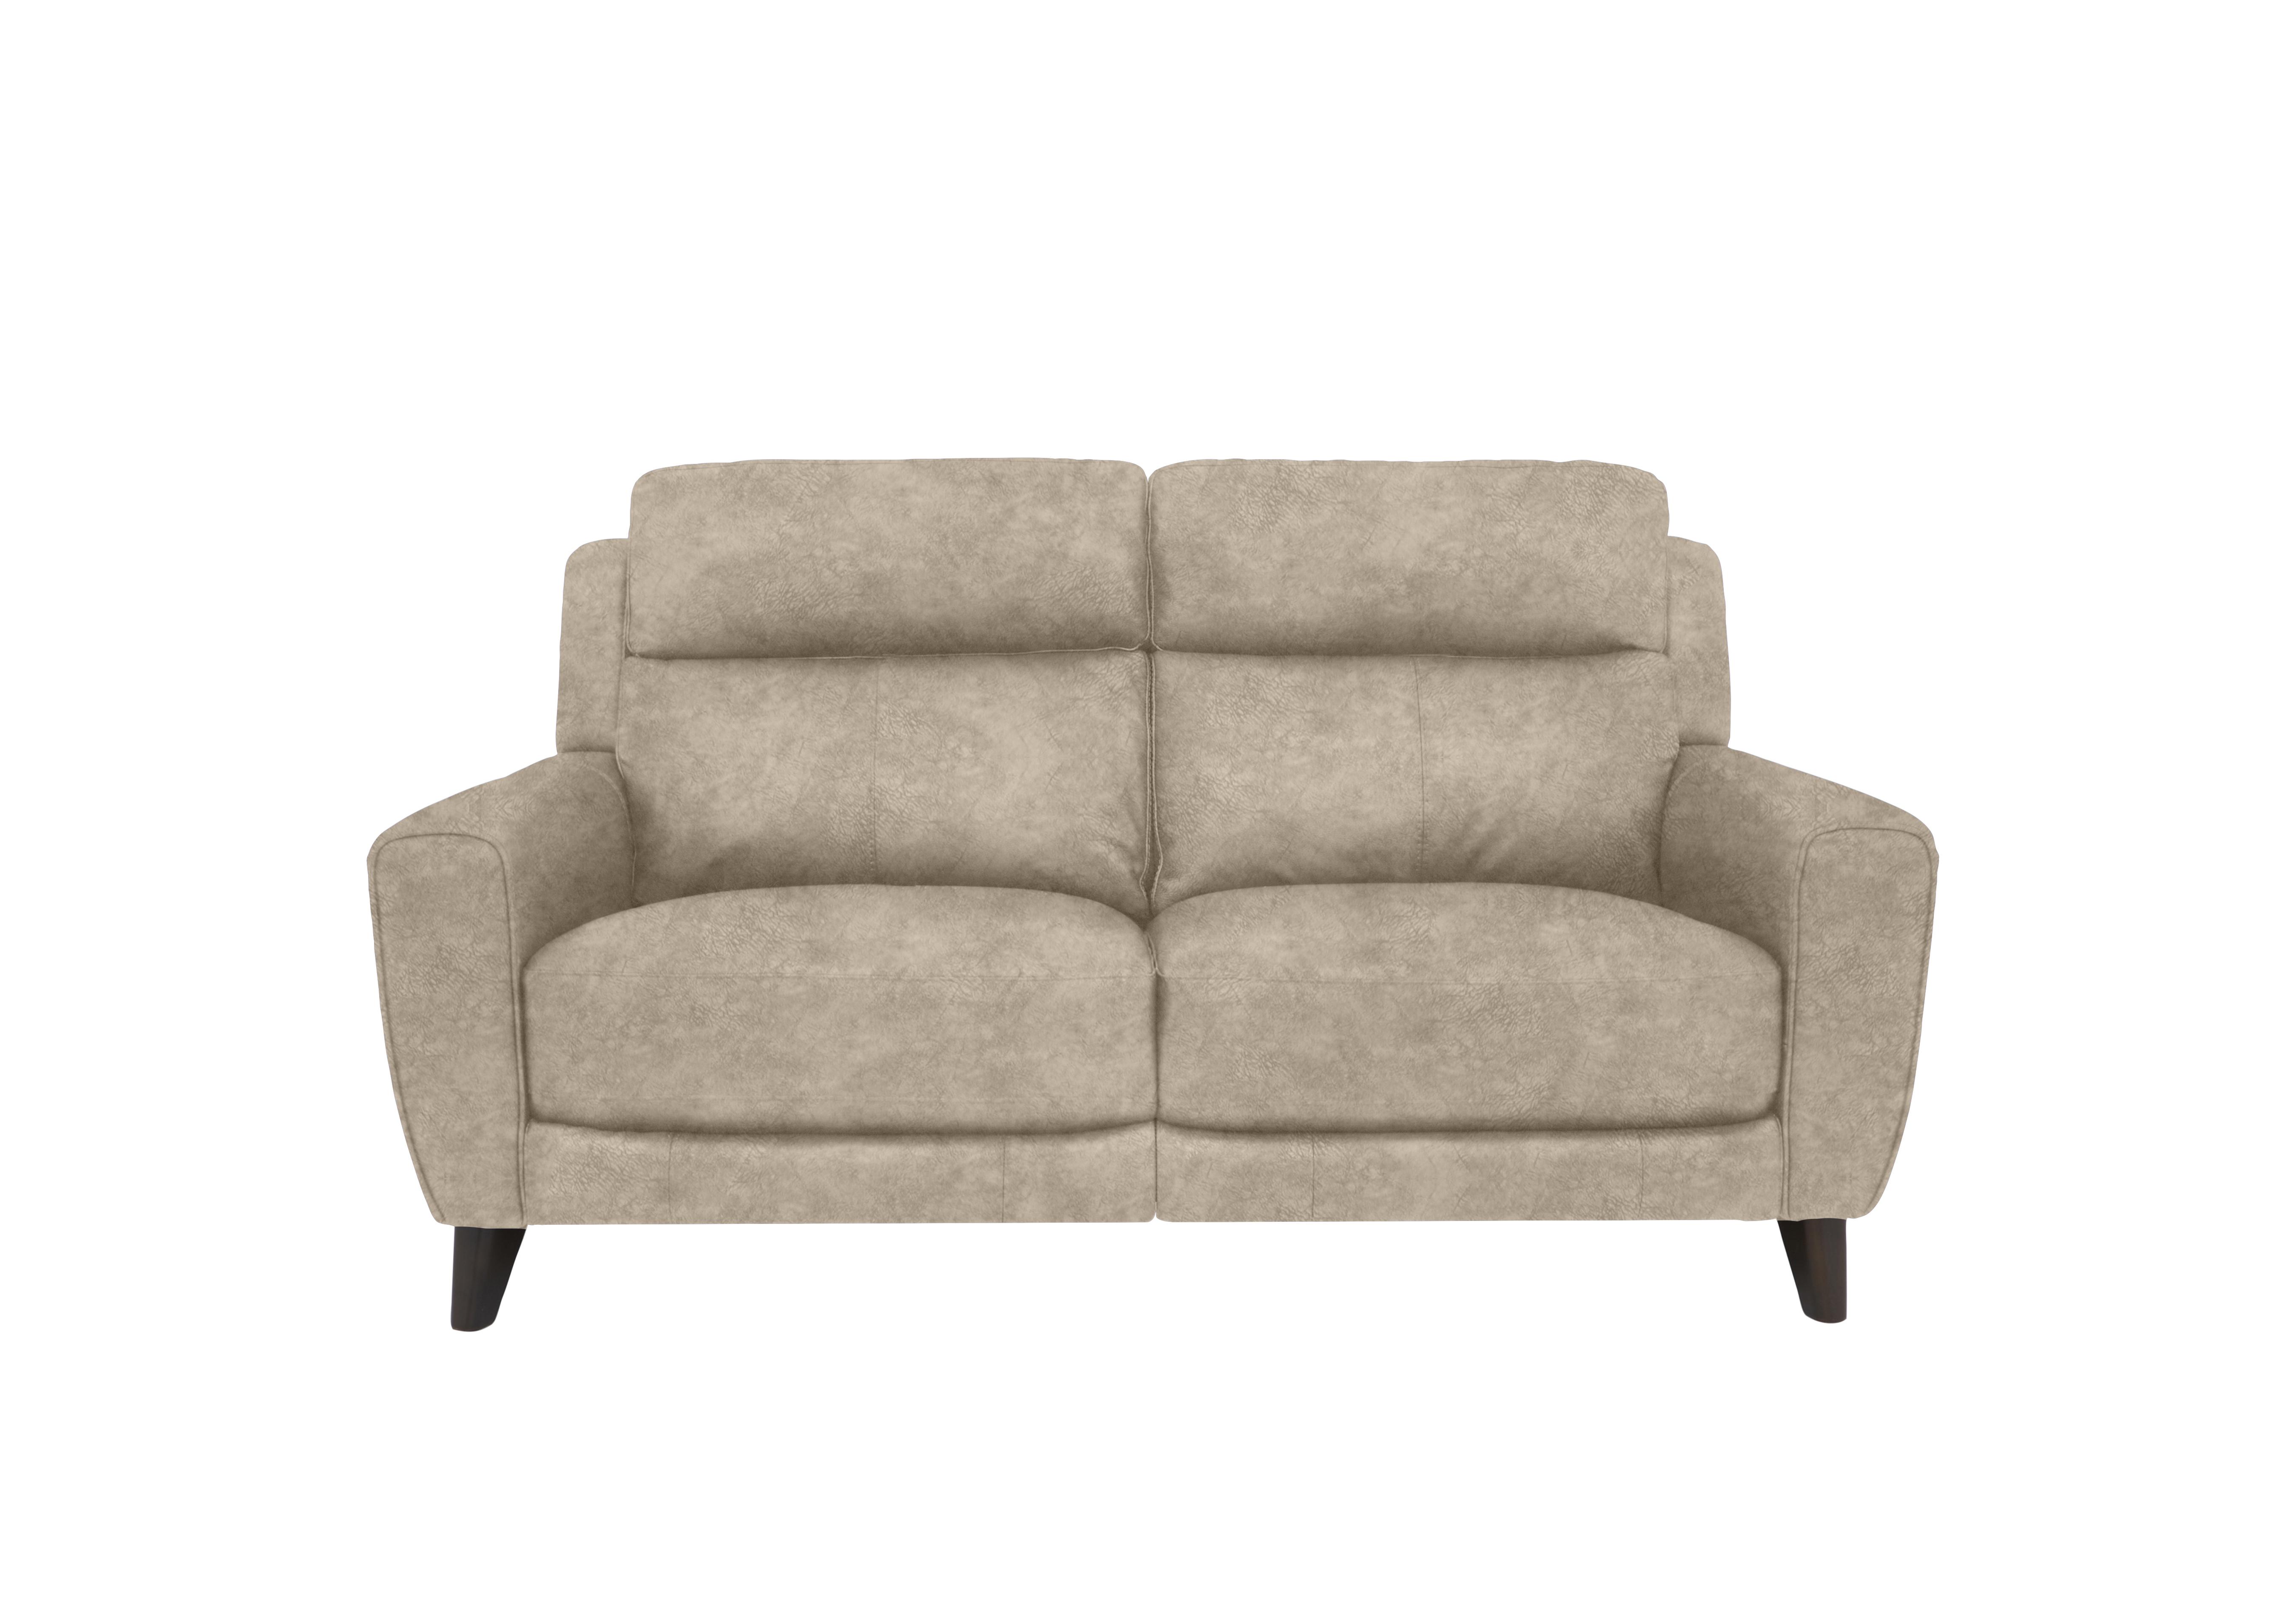 Zen 2 Seater Fabric Sofa in Bfa-Bnn-R26 Cream on Furniture Village